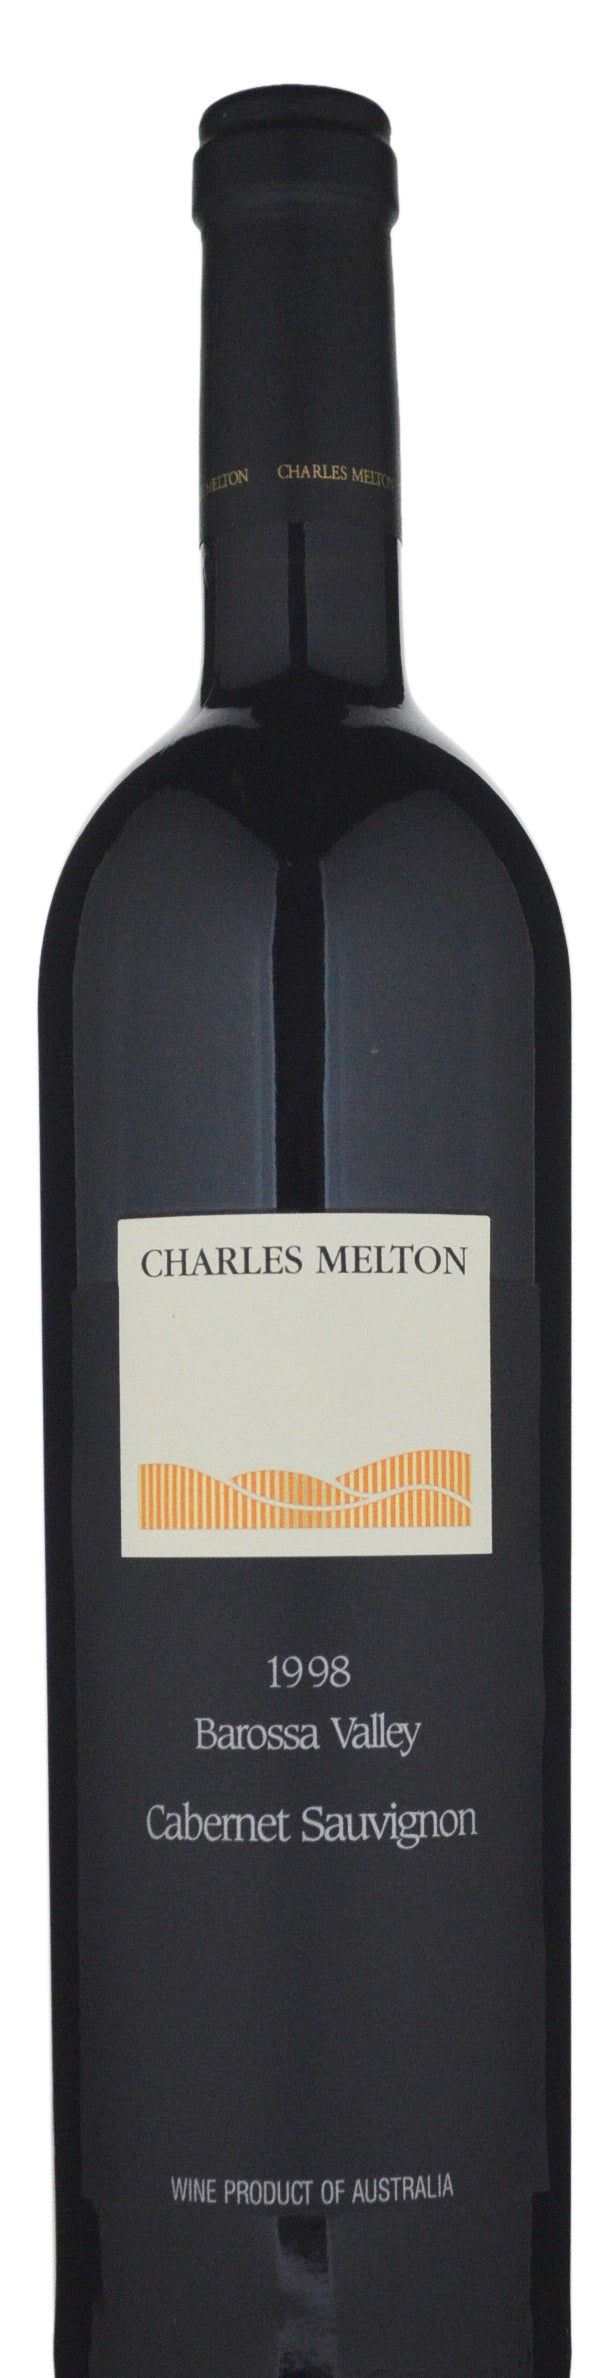 Charles Melton Cabernet Sauvignon 1998